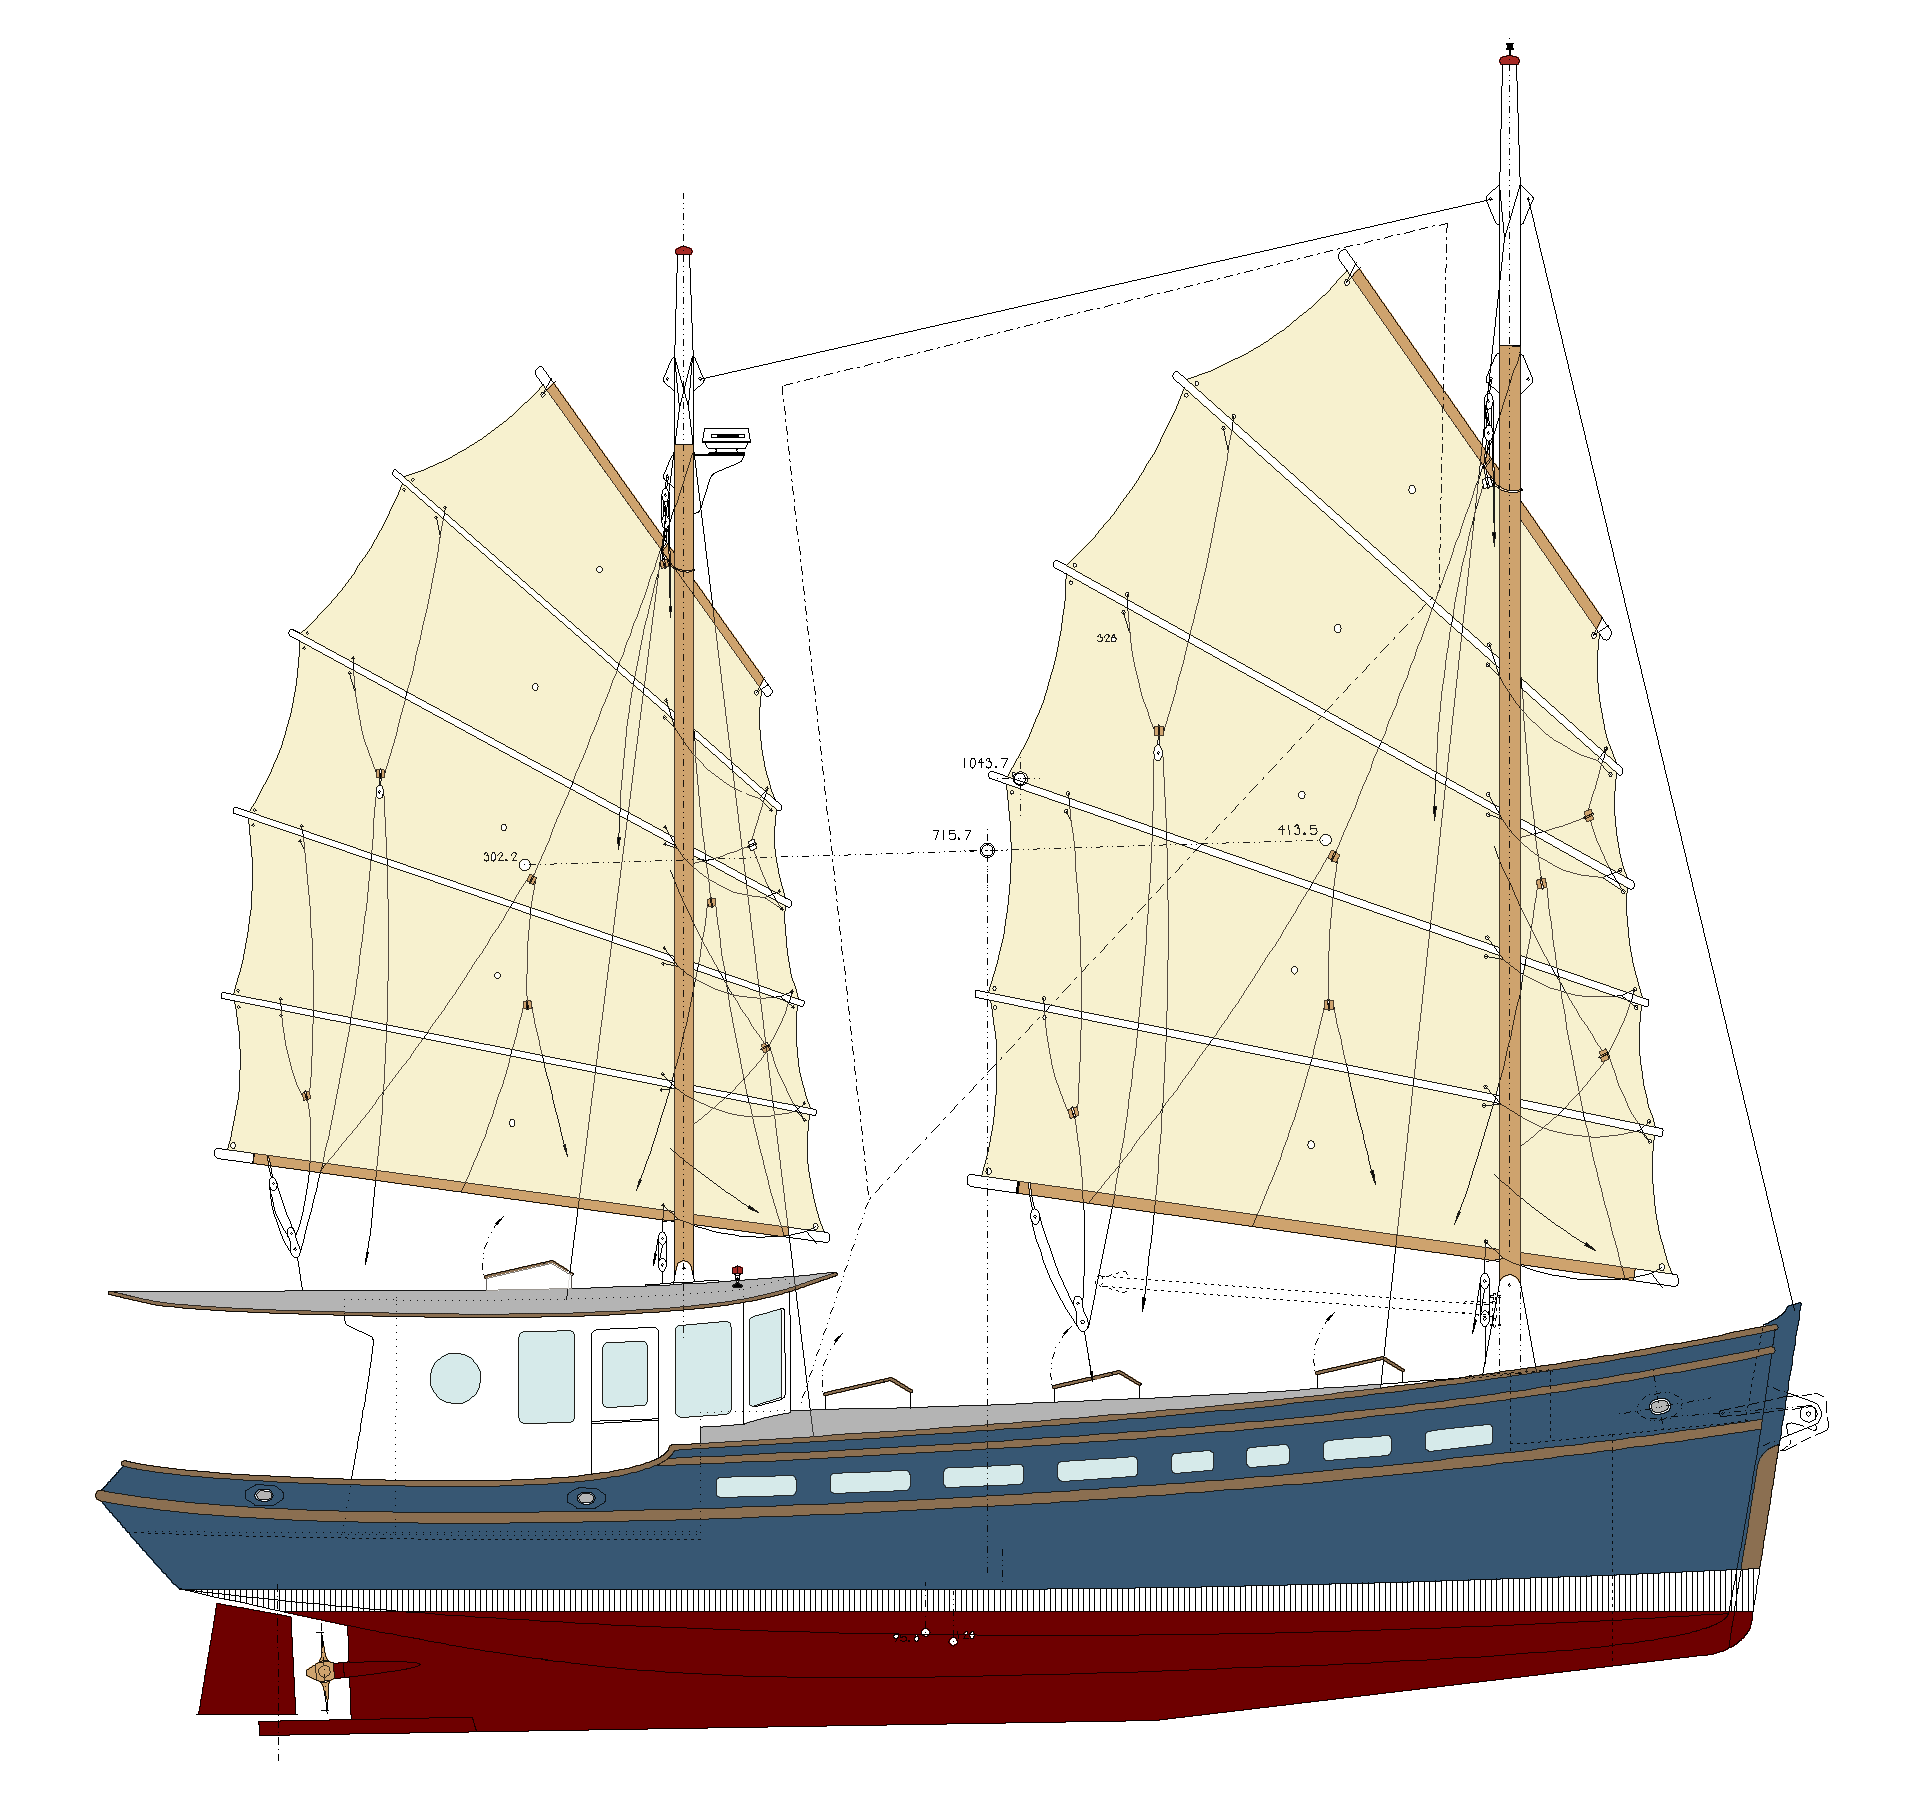 50' Motor Yacht RENEGADE - Kasten Marine Design, Inc.